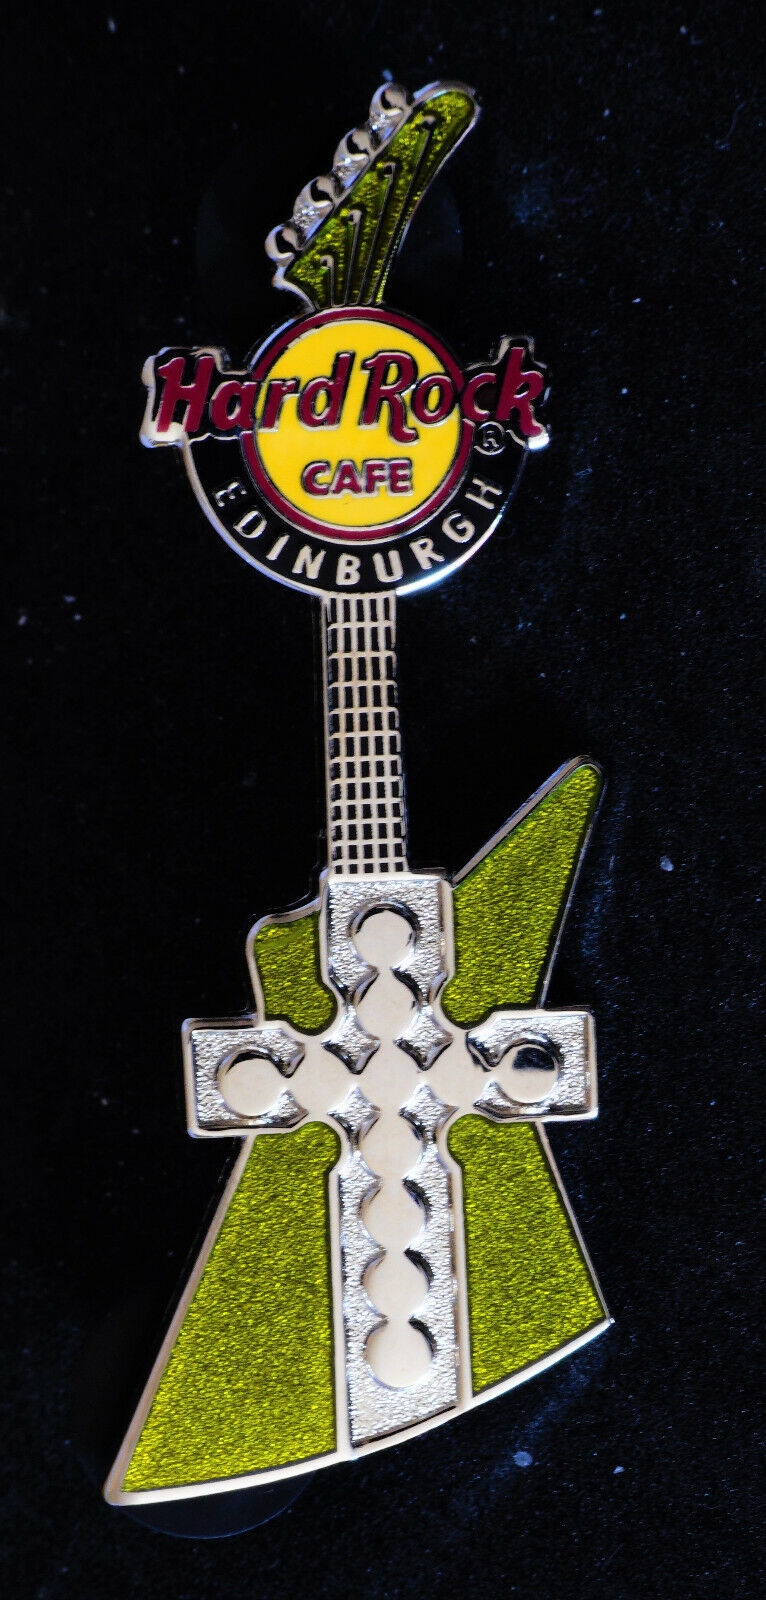 Hard Rock Cafe EDINBURGH 2007 Green Cross Guitar Series Pin LE 250